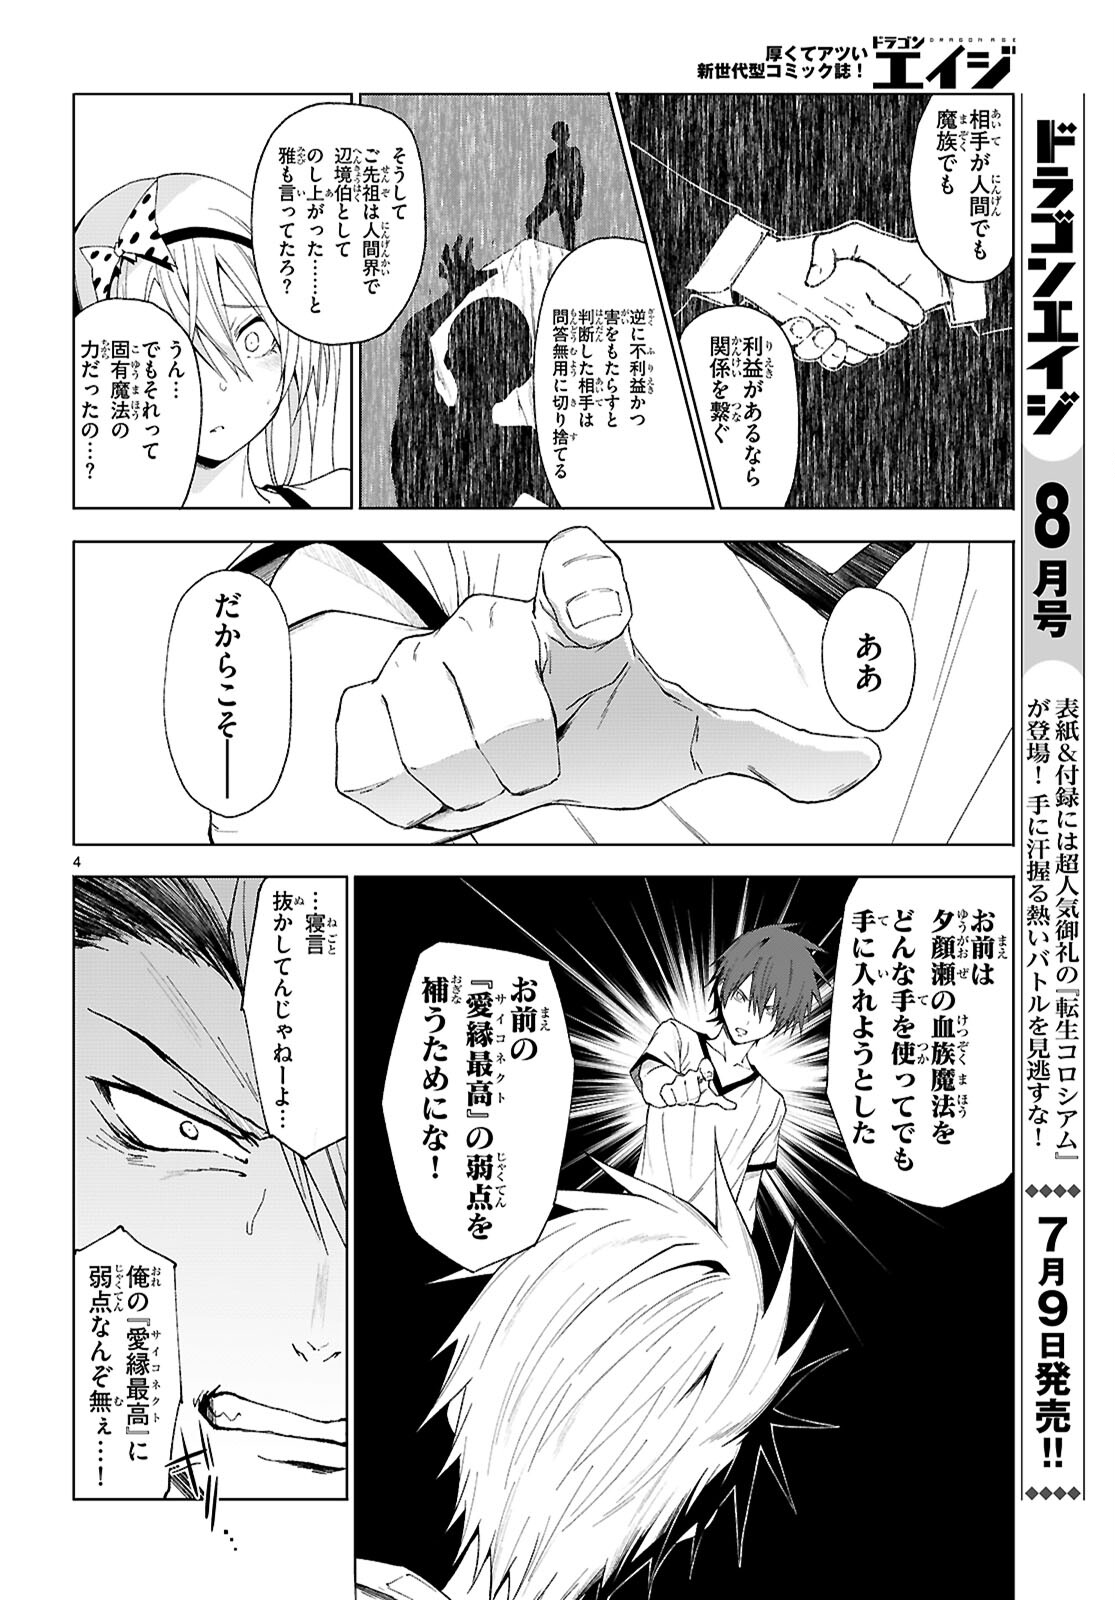 Maou Gakuen no Hangyakusha - Chapter 44 - Page 4